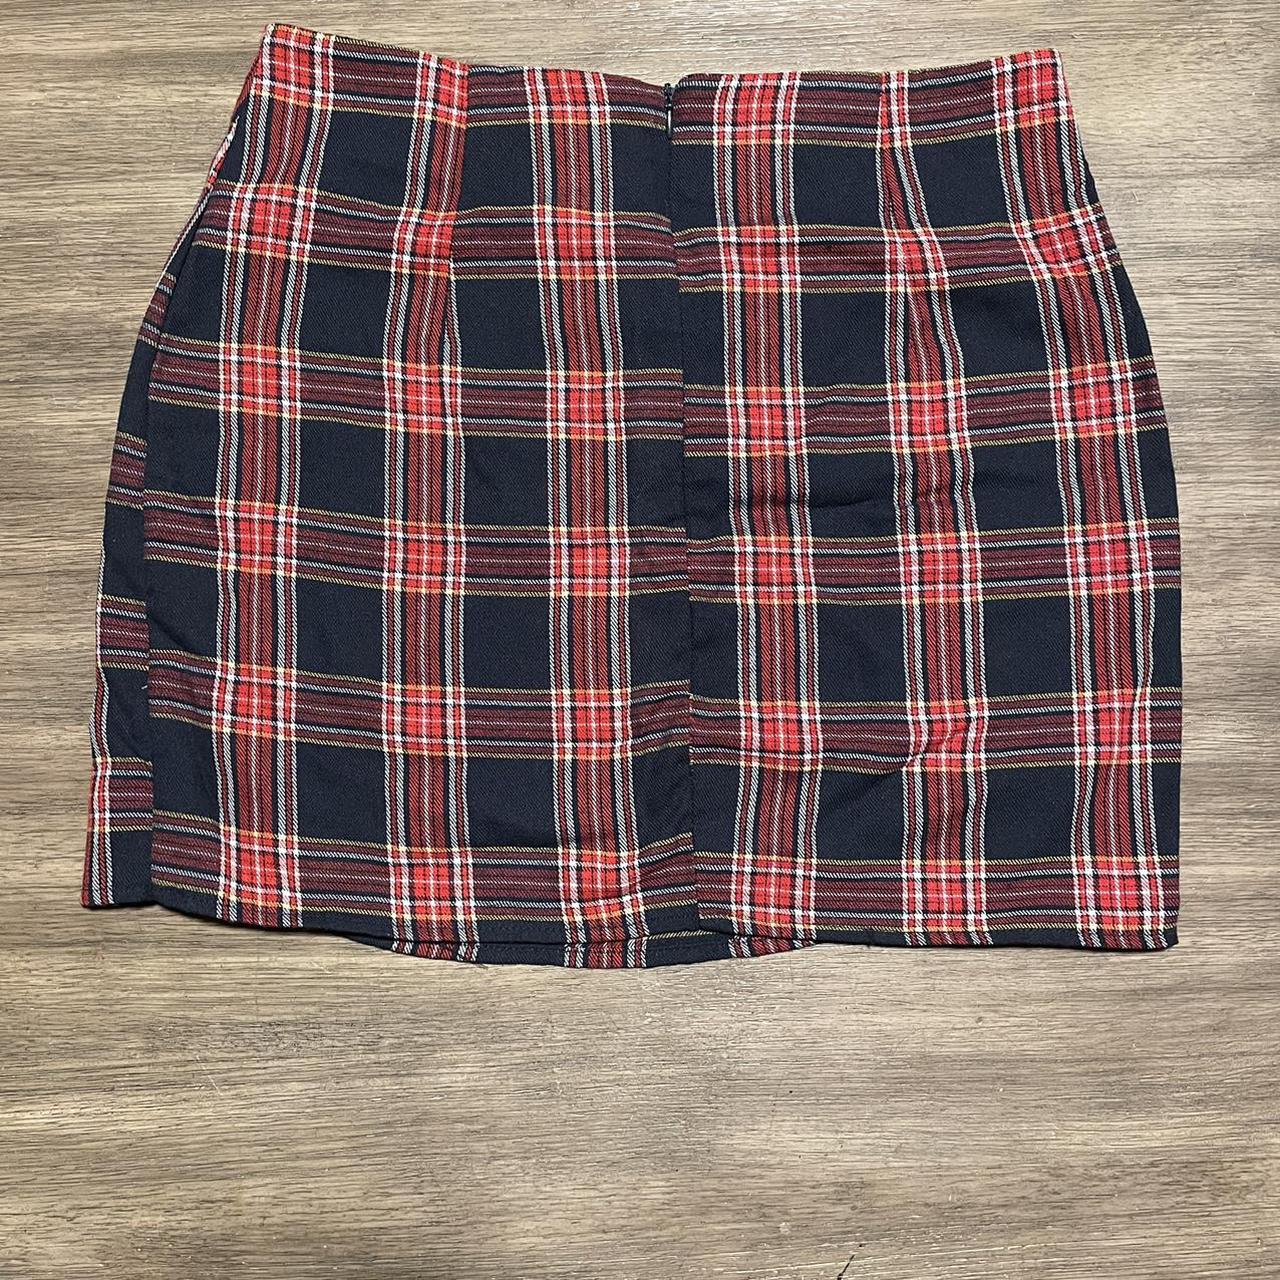 Product Image 2 - Plaid Mini Skirt
Skirt has enclosed